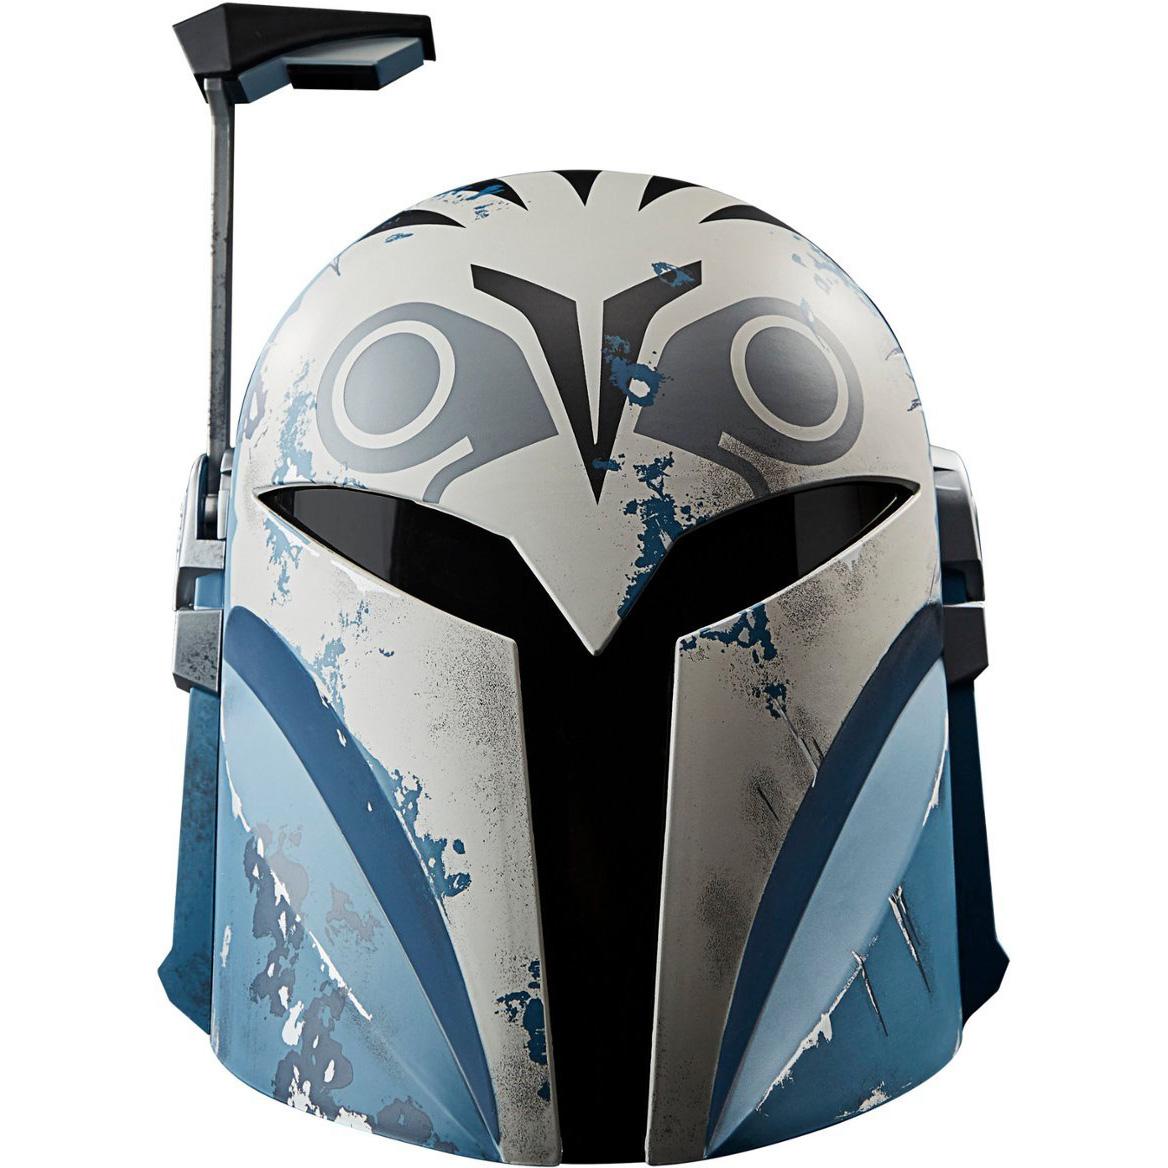 Hasbro Star Wars The Black Series Bo-Katan Kryze Helmet for $59.99 Shipped